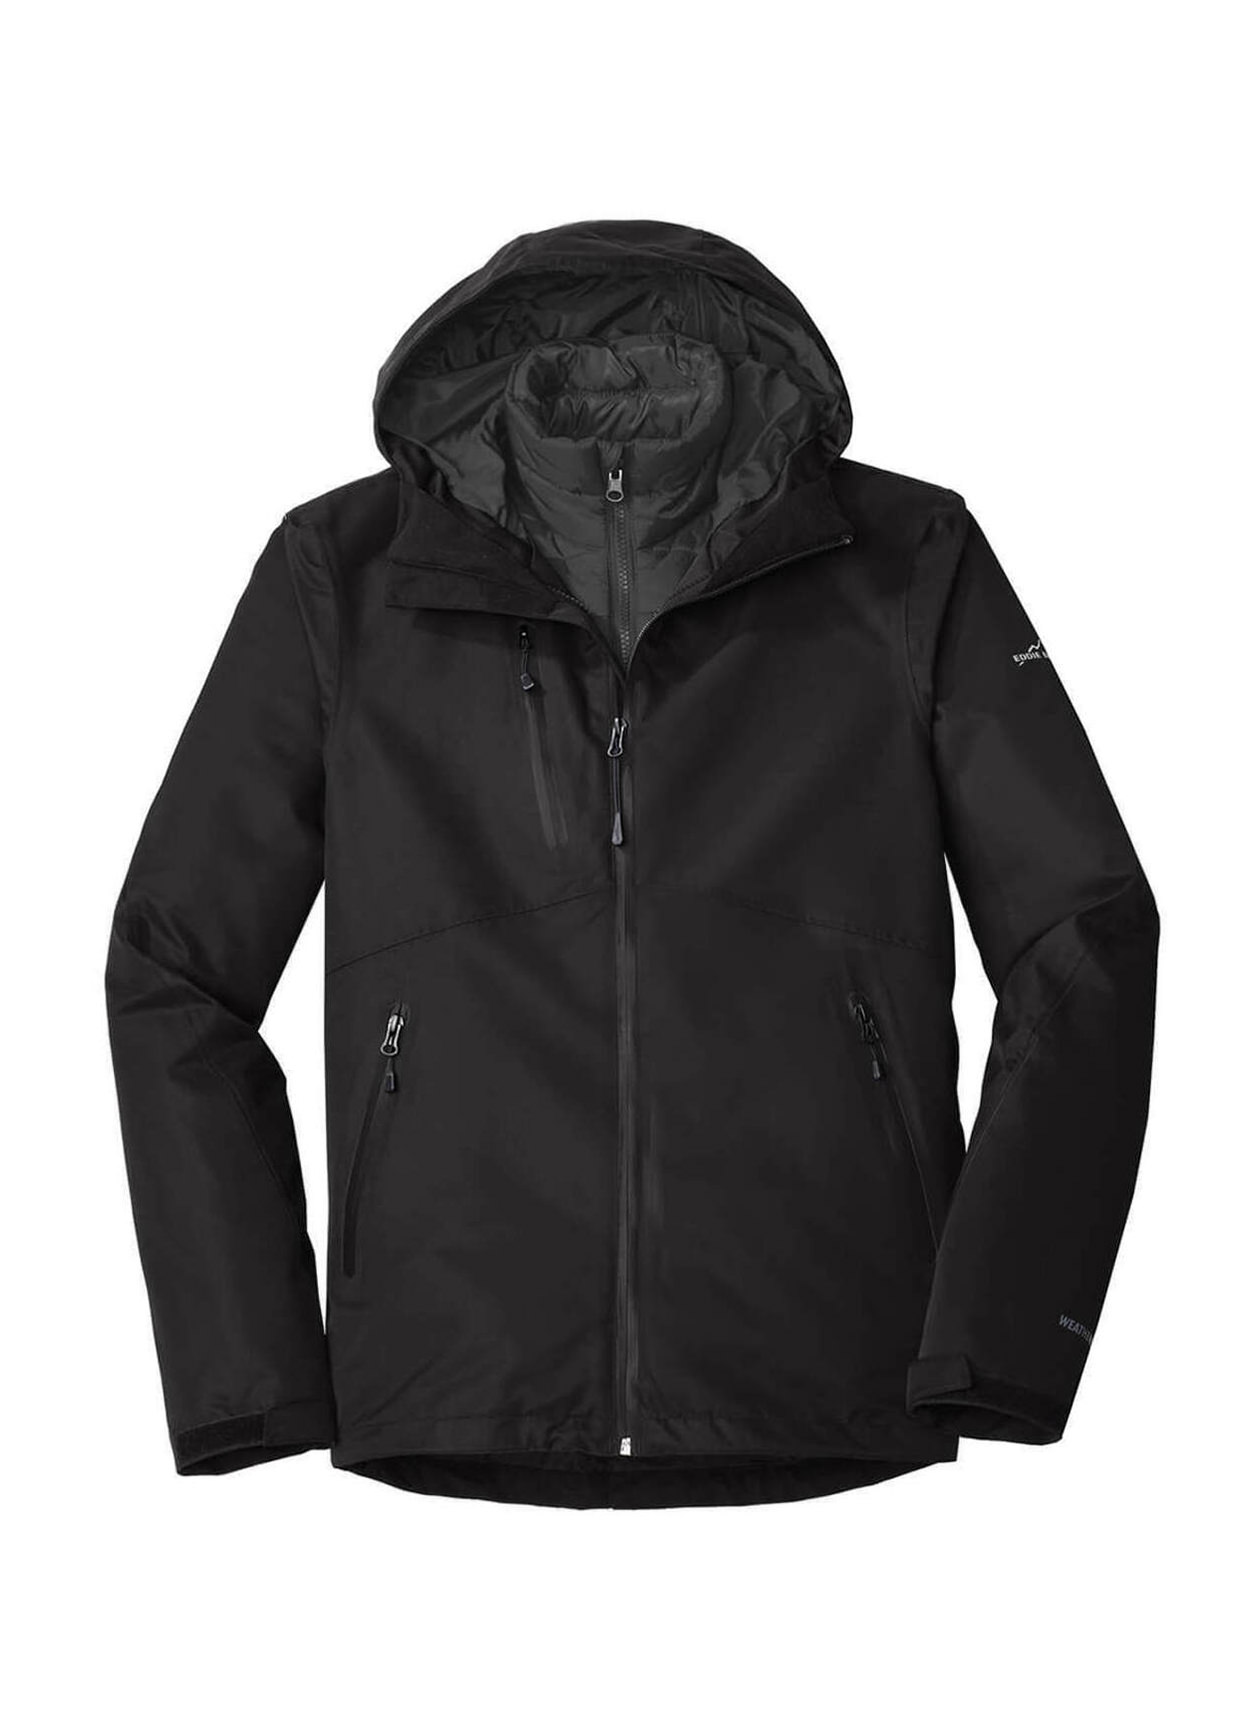 Eddie Bauer Men's Black WeatherEdge Plus 3-in-1 Jacket